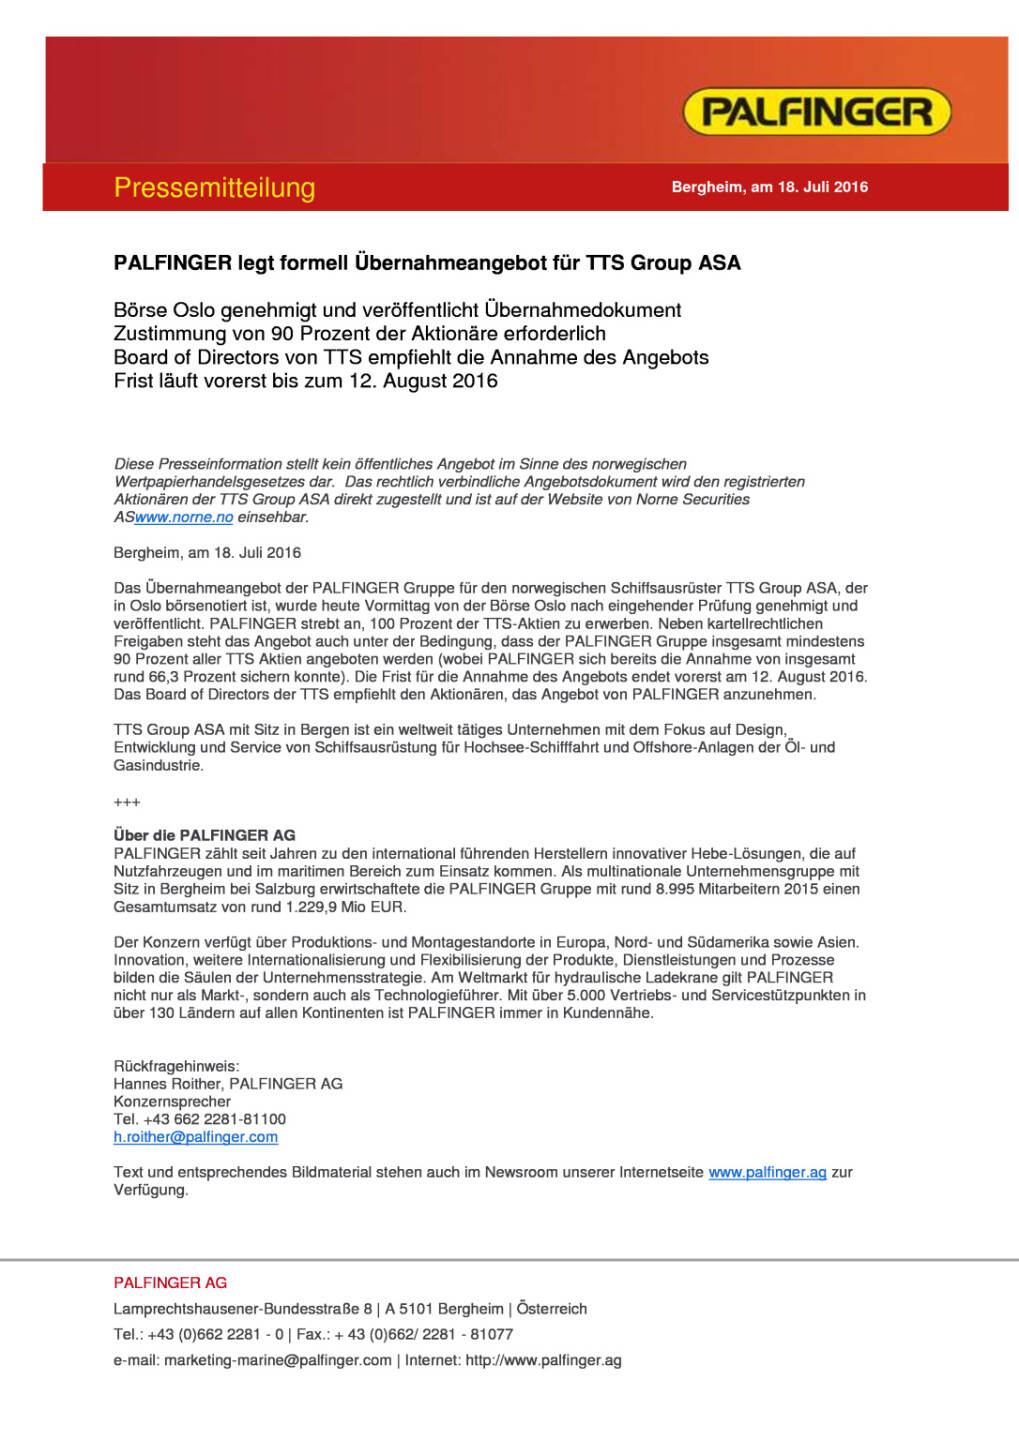 Palfinger: Übernahmeangebot für TTS Group ASA, Seite 1/1, komplettes Dokument unter http://boerse-social.com/static/uploads/file_1438_palfinger_ubernahmeangebot_fur_tts_group_asa.pdf